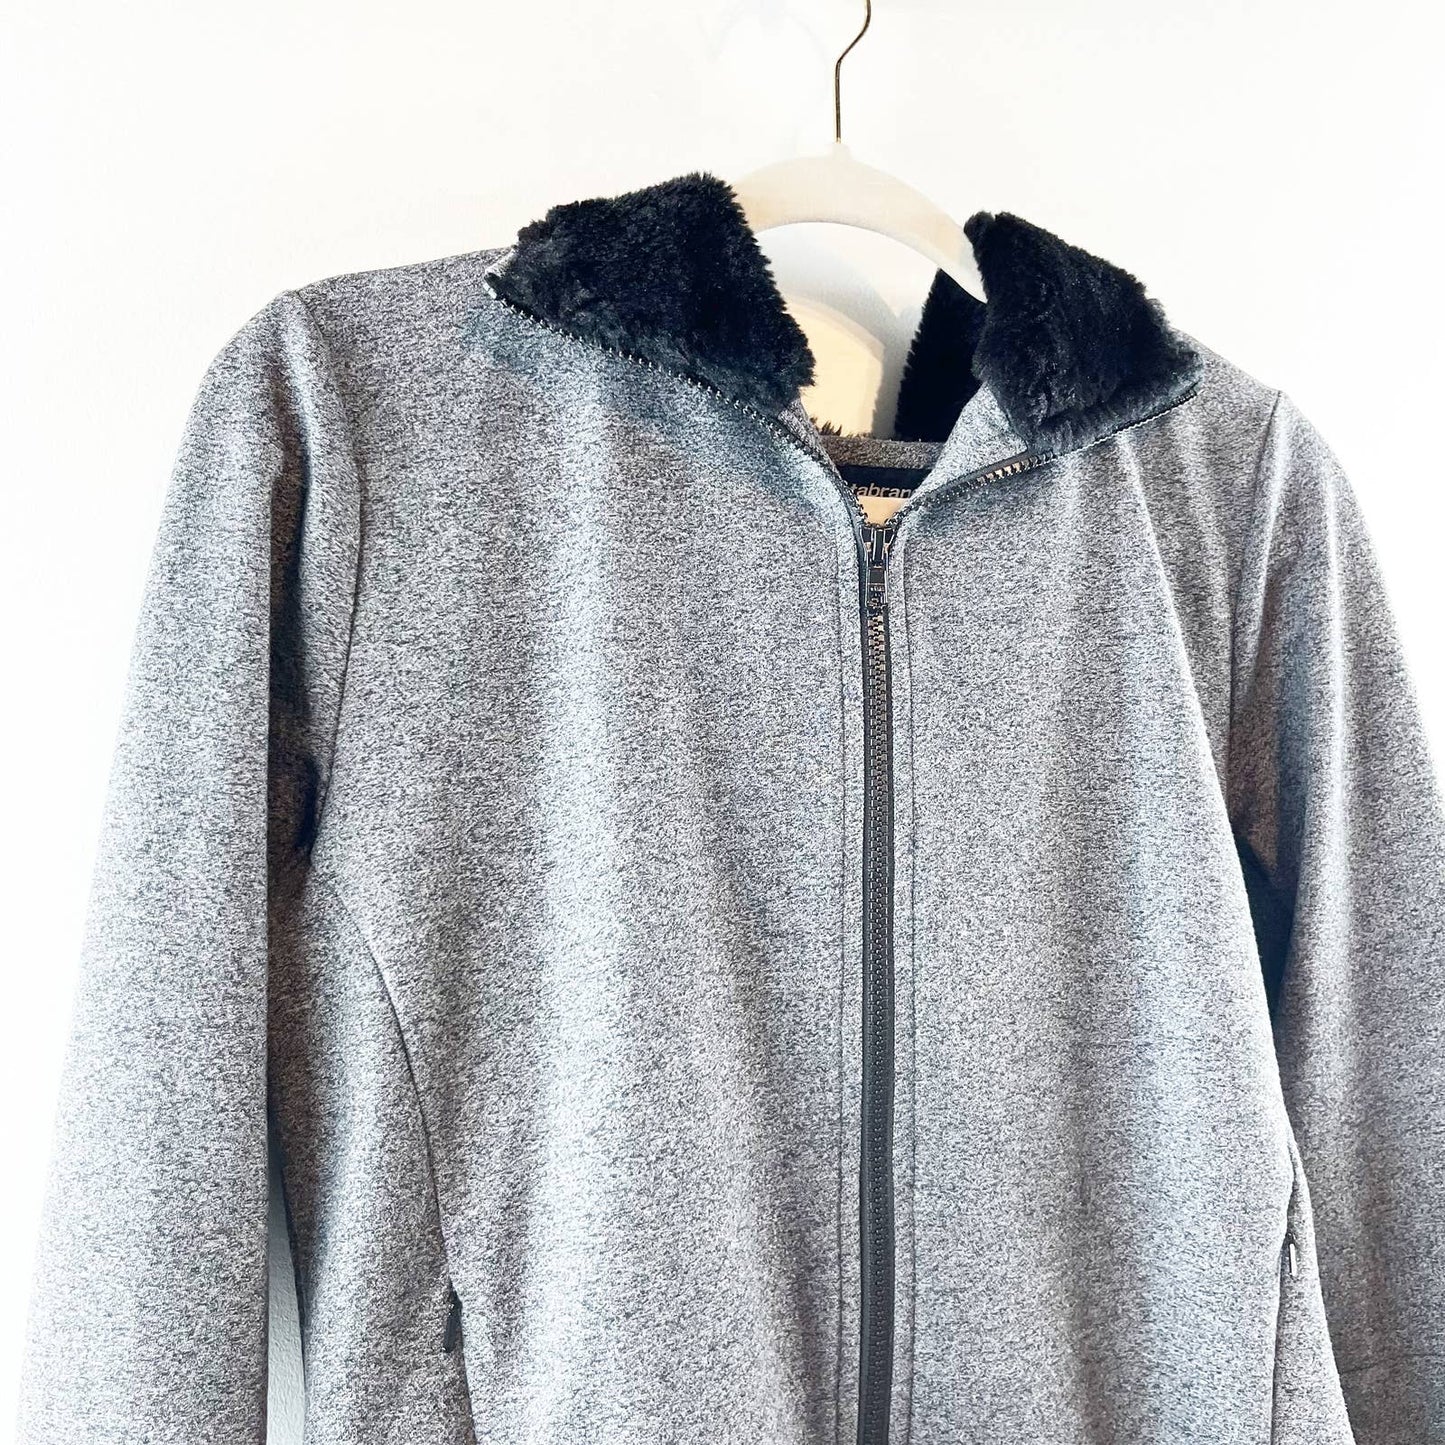 Betabrand Knockout Travel Faux Fur Long Sleeve Zip Up Hoodie Jacket Gray Medium